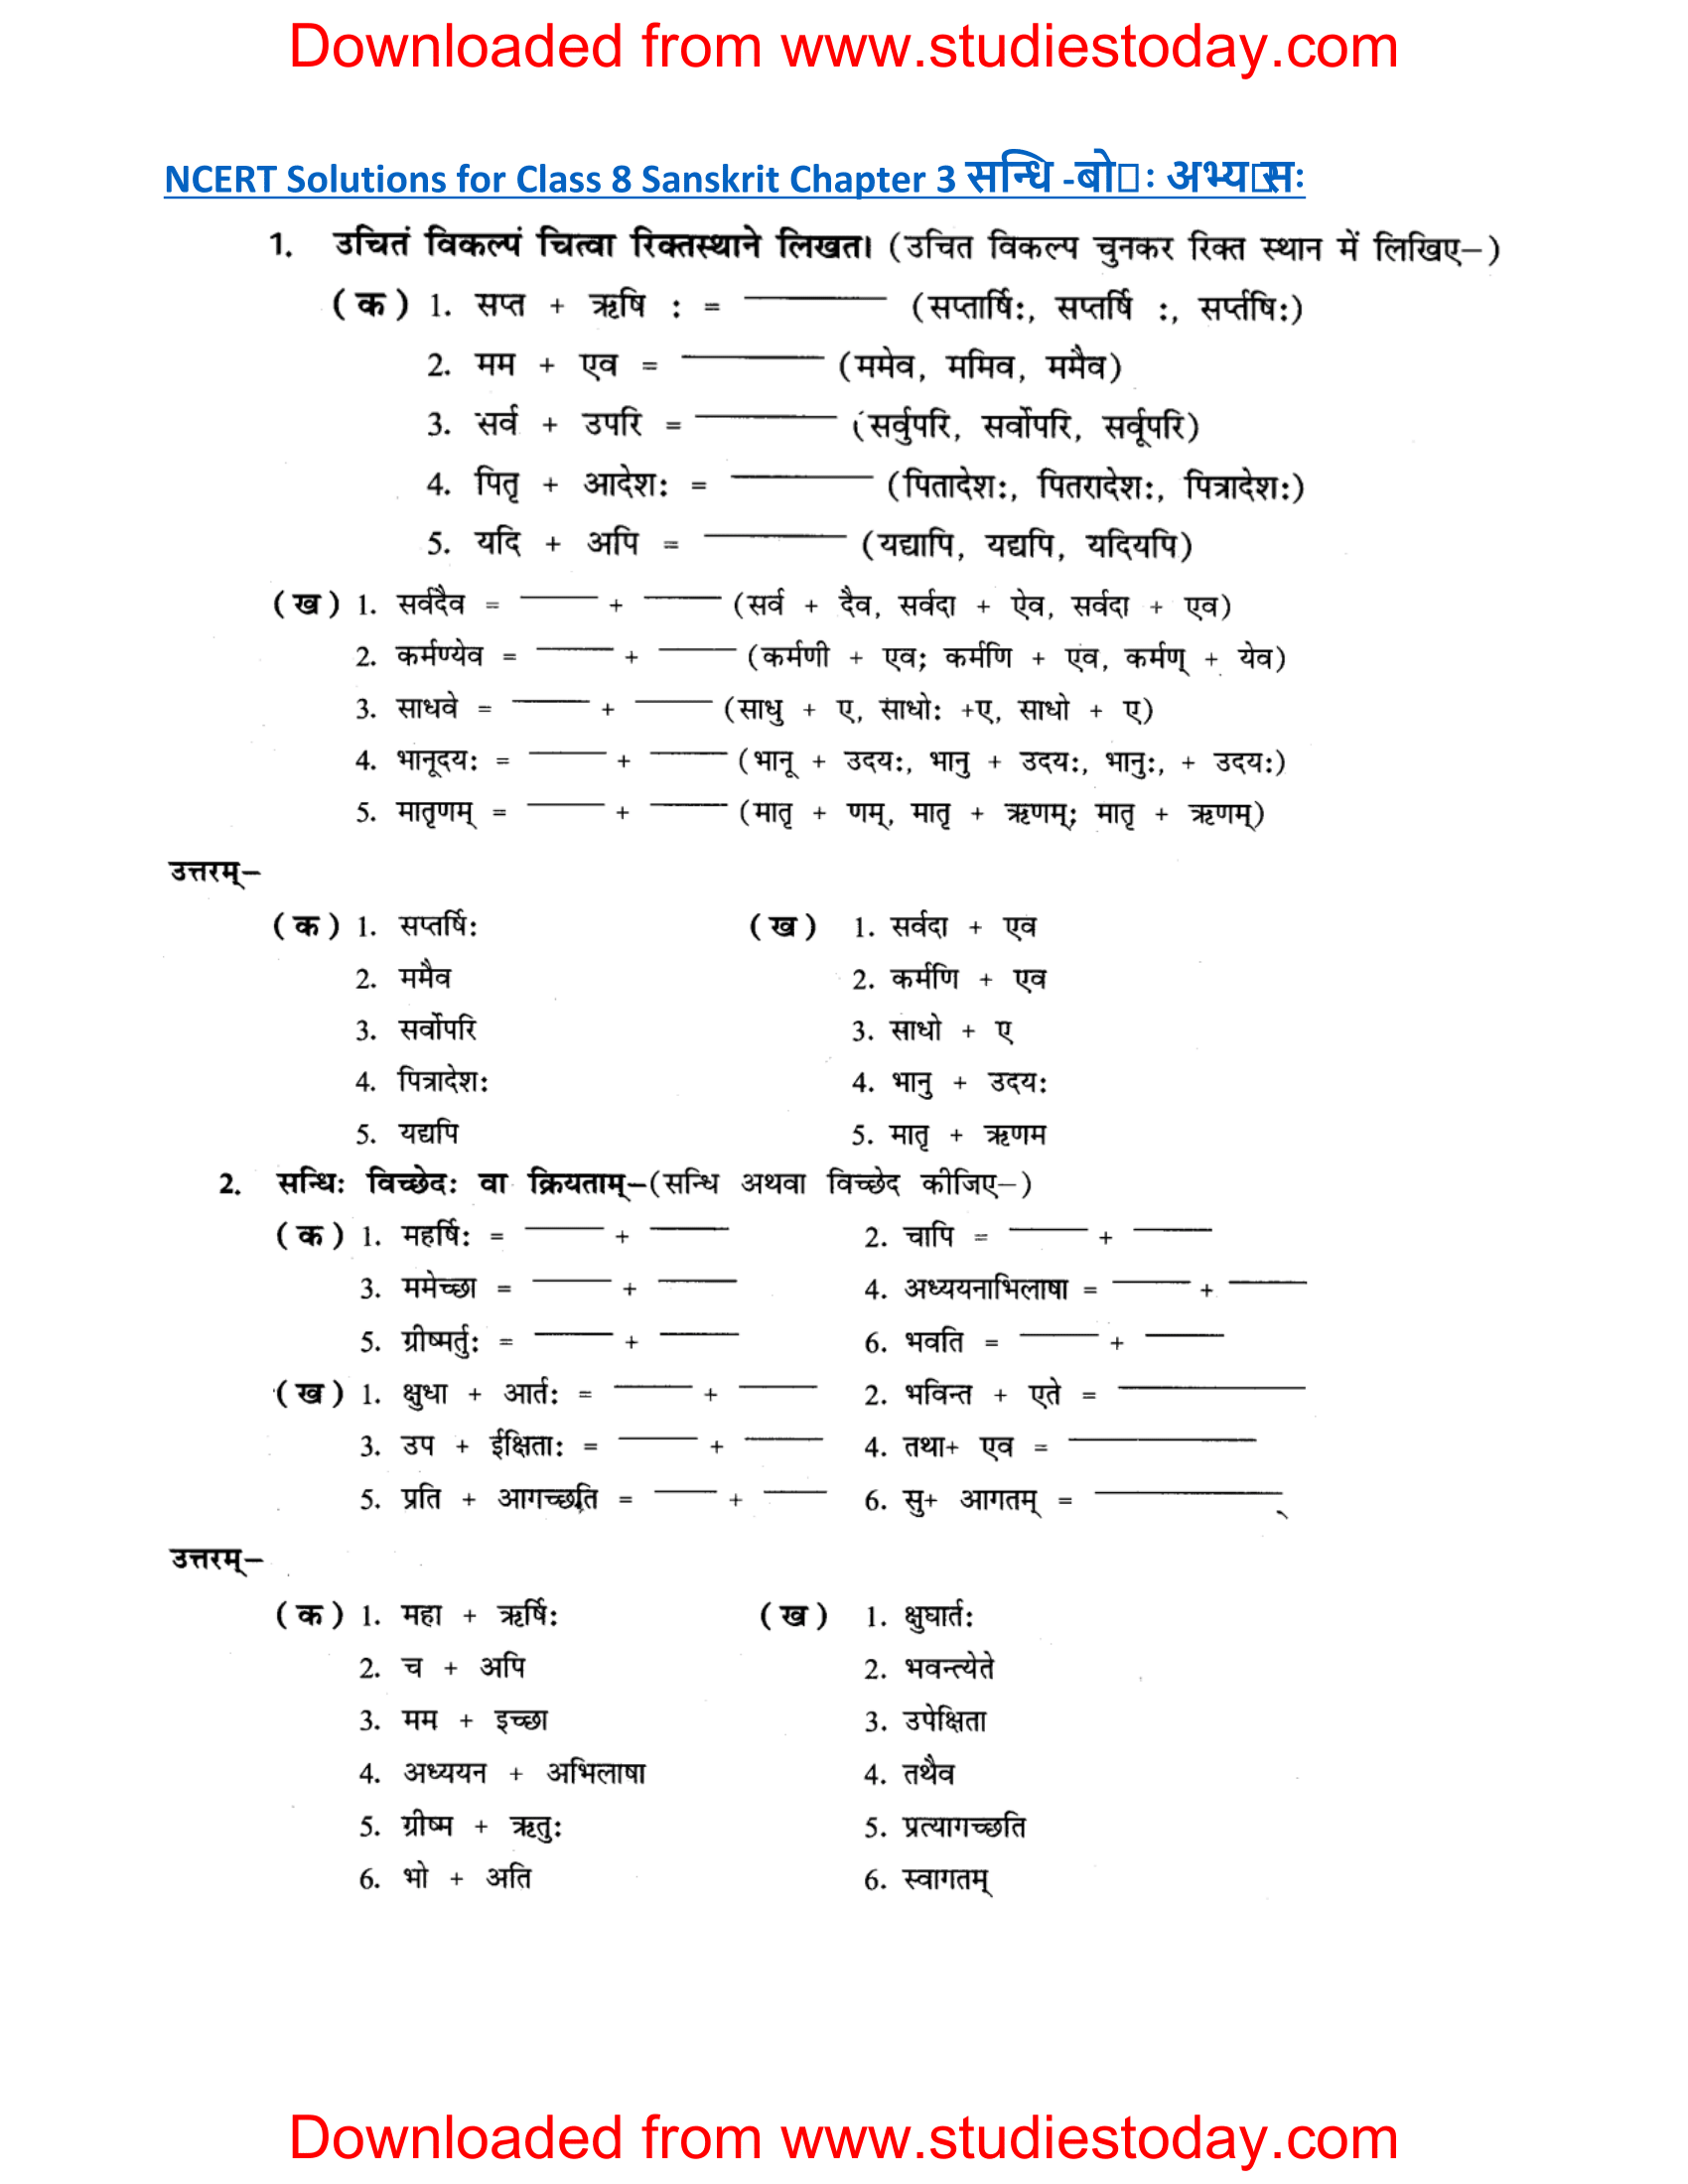 ncert-solutions-class-8-sanskrit-chapter-3-sandhi-bodh-abhyas-1